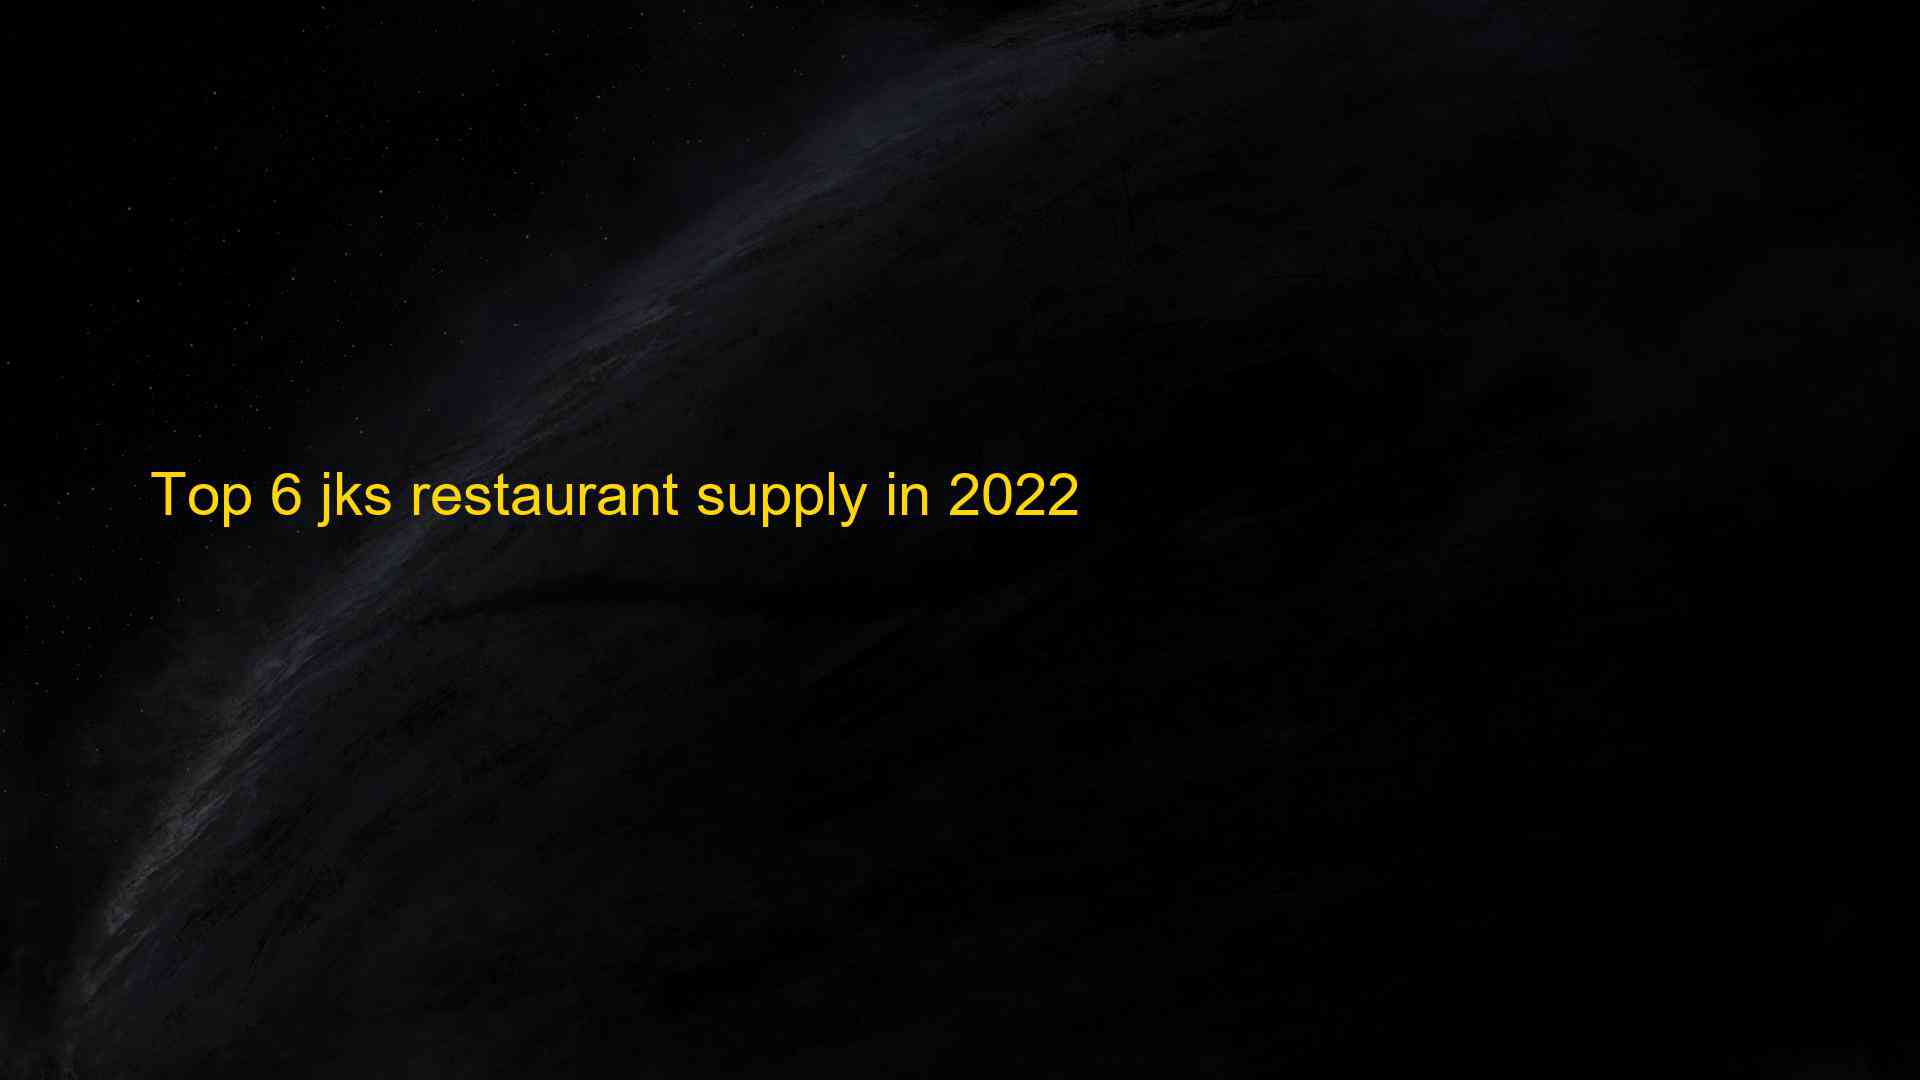 Top 6 jks restaurant supply in 2022 1663180386